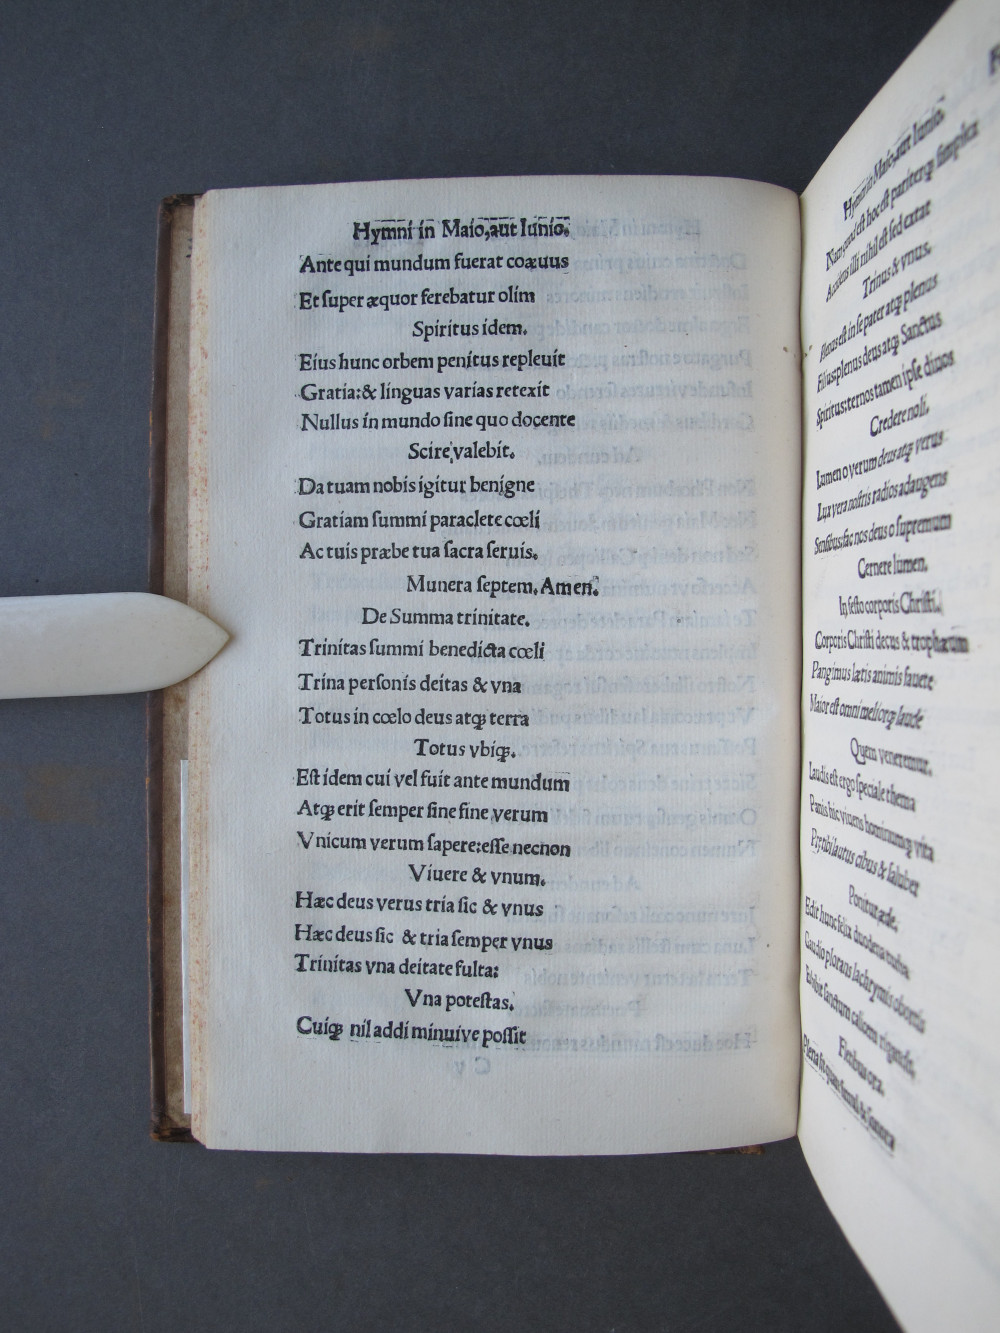 Folio 21 verso